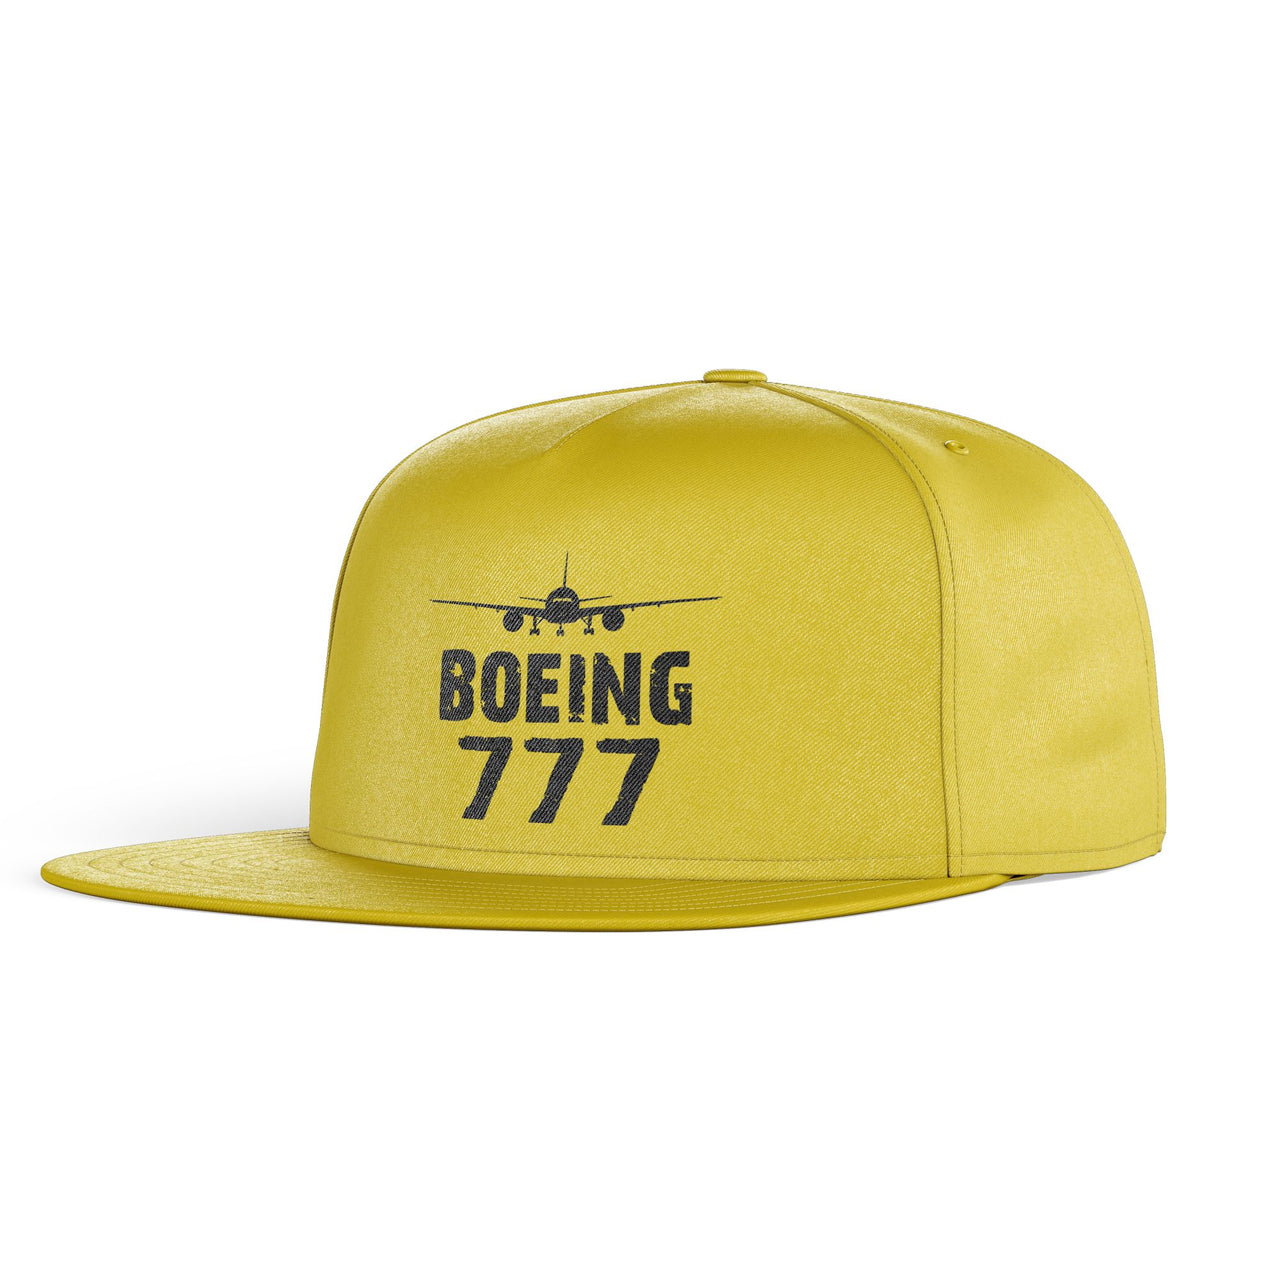 Boeing 777 & Plane Designed Snapback Caps & Hats